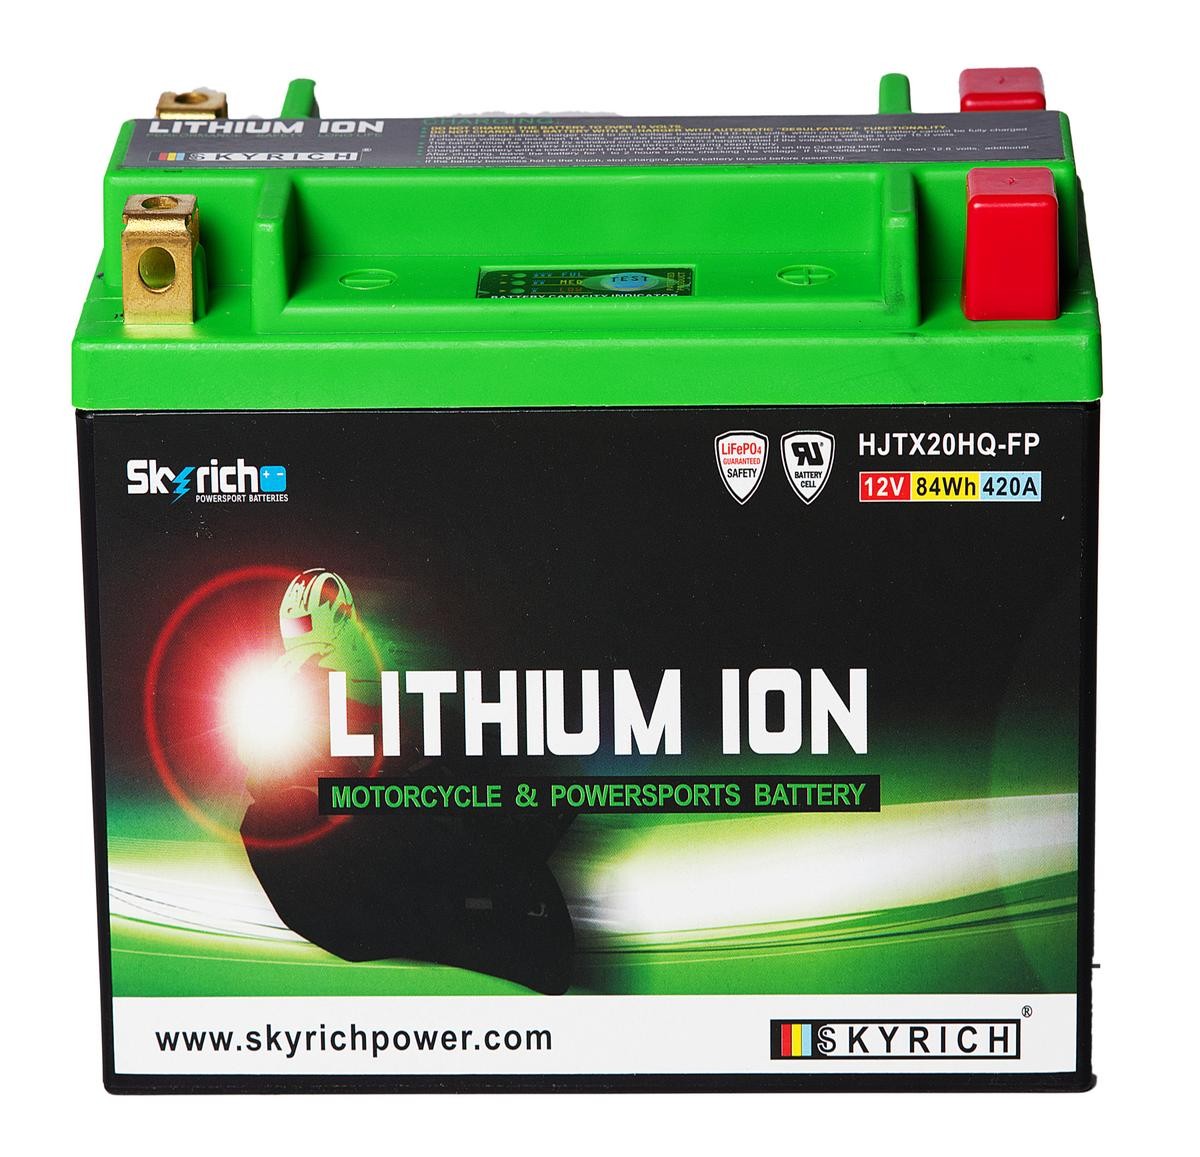 HARLEY-DAVIDSON SPORTSTER Batterie 12V 7Ah 420A N Li-Ionen-Batterie SKYRICH LITHIUM ION HJTX20HQ-FP